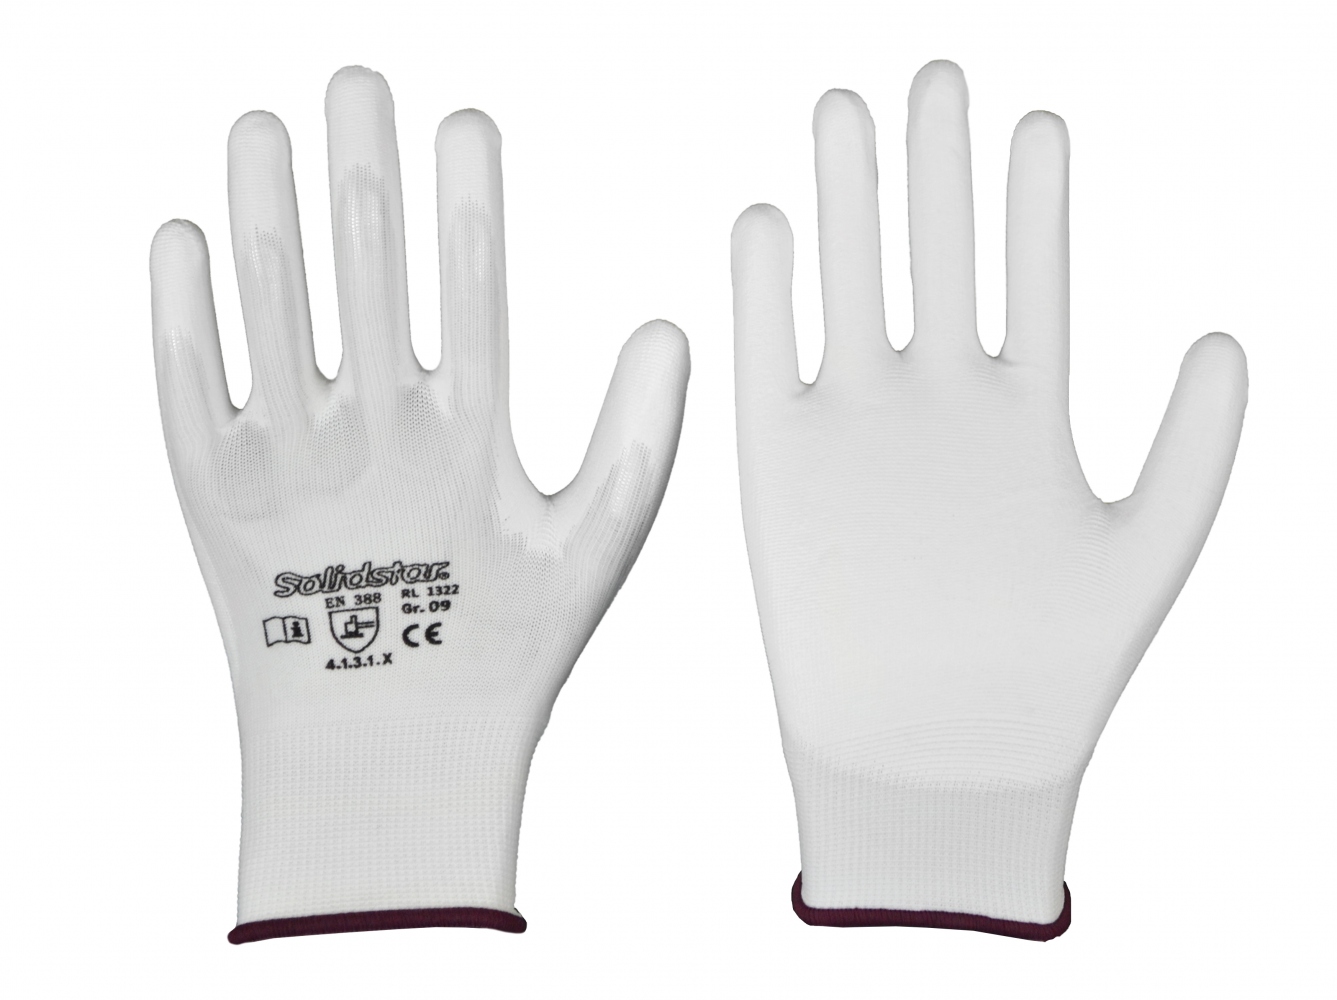 pics/Leipold/Handschuhe/solidstar/solidstar-1322-nylon-fine-knit-safety-gloves-pu-coated-en388.jpg